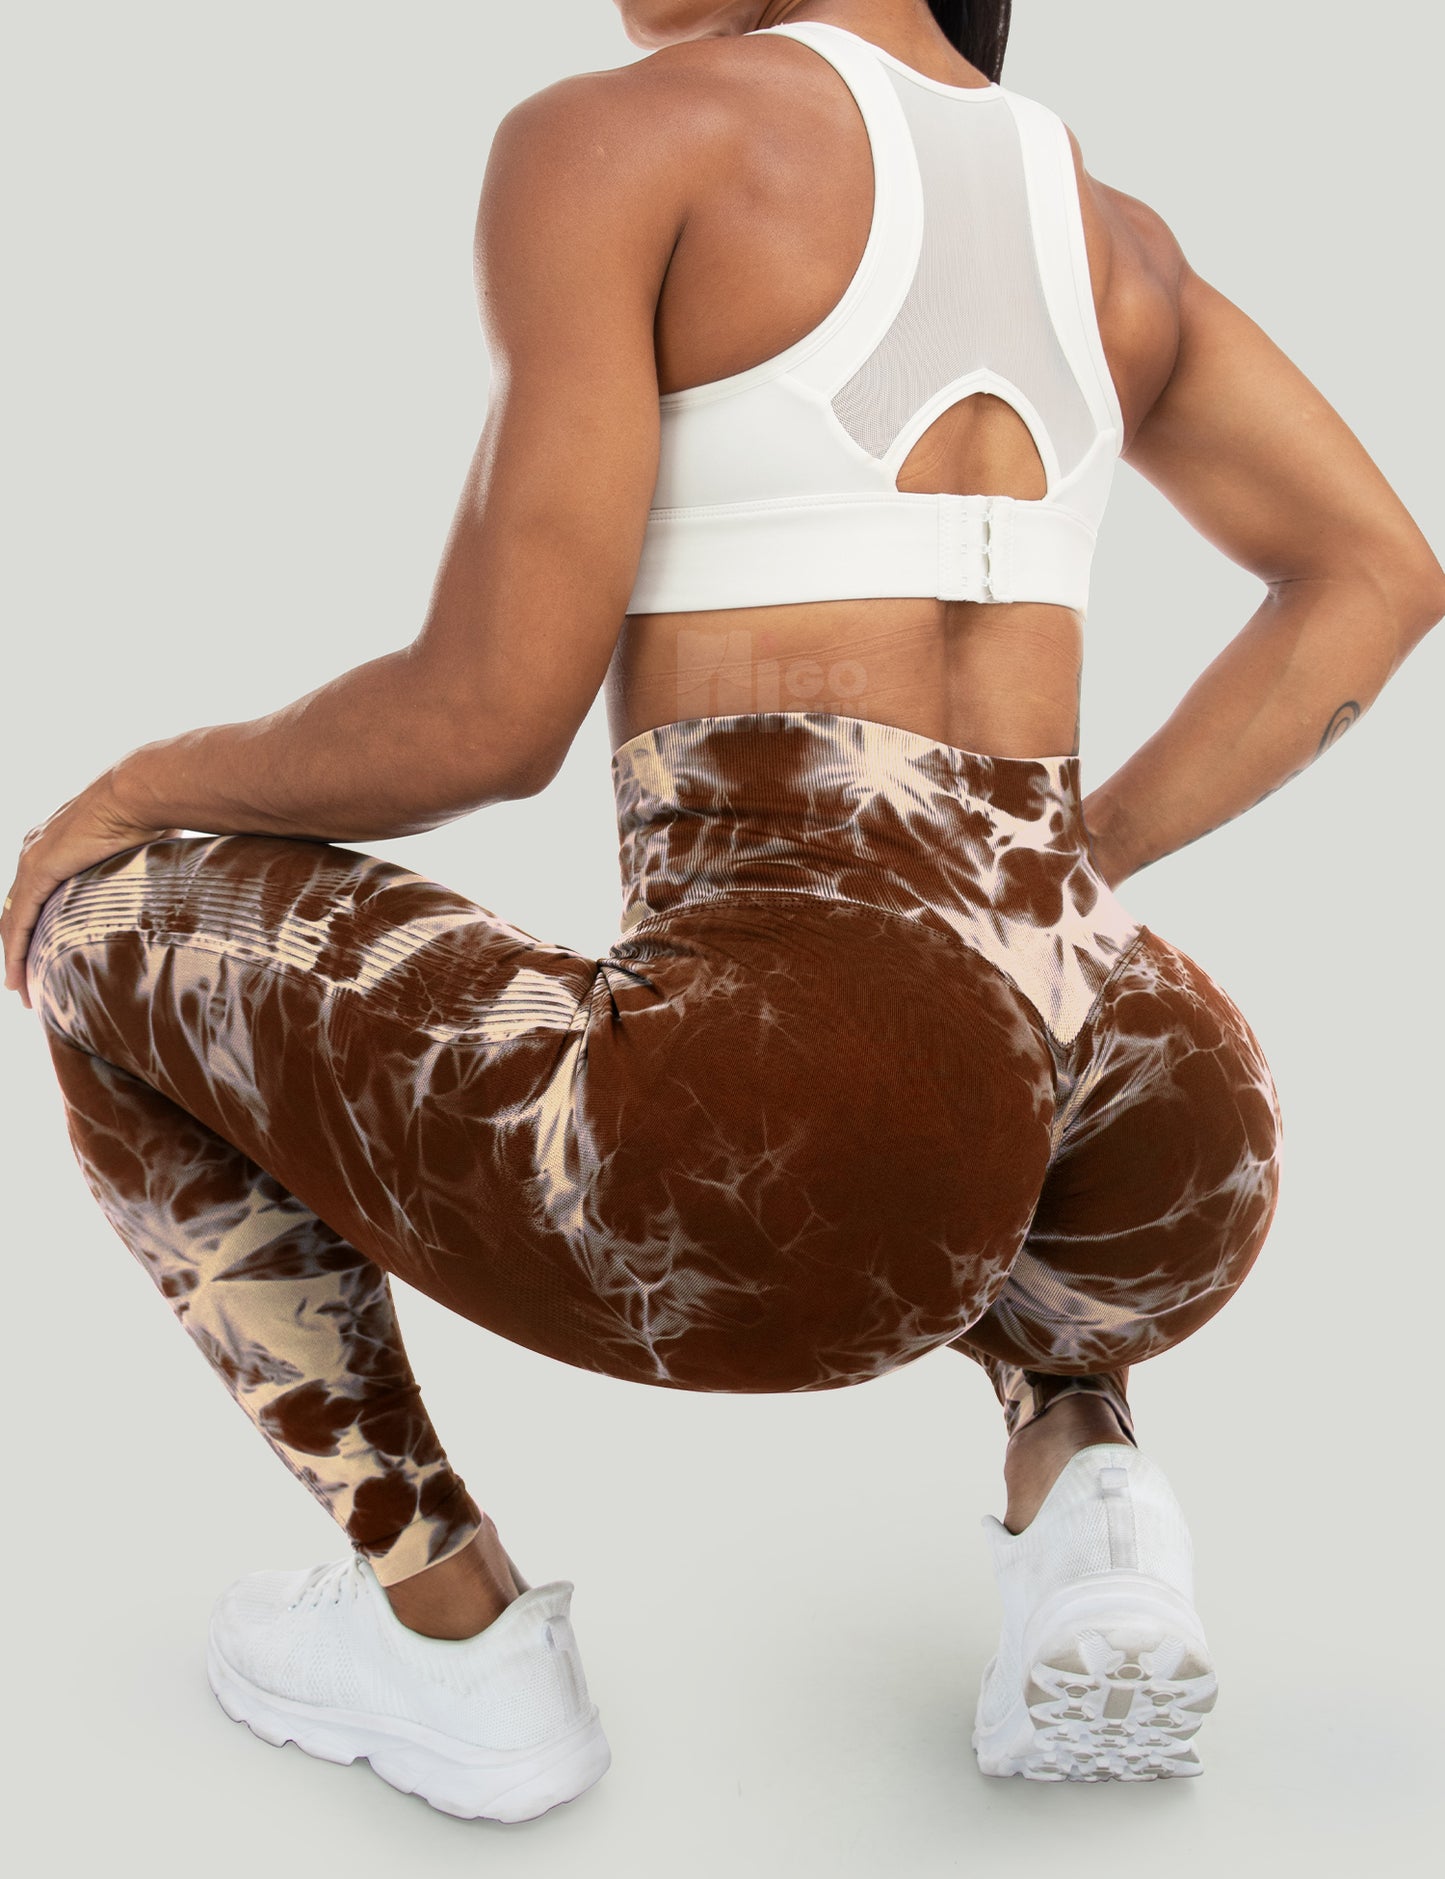 HIGORUN Tie-Dye Workout Seamless Leggings for Women High Waist Gym Leggings Yoga Pants Brown